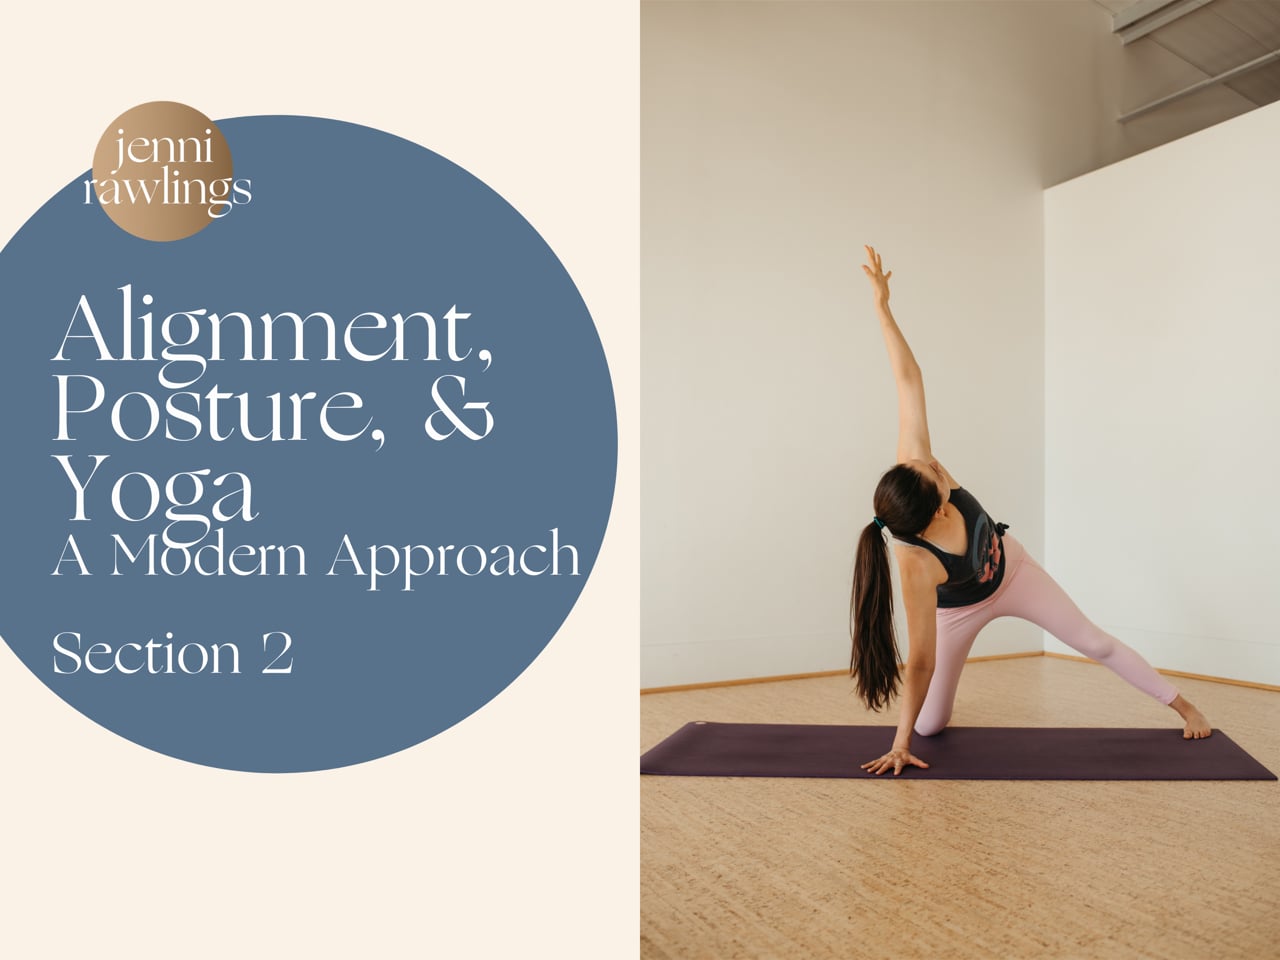 Section 2 – Alignment, Posture, & Yoga